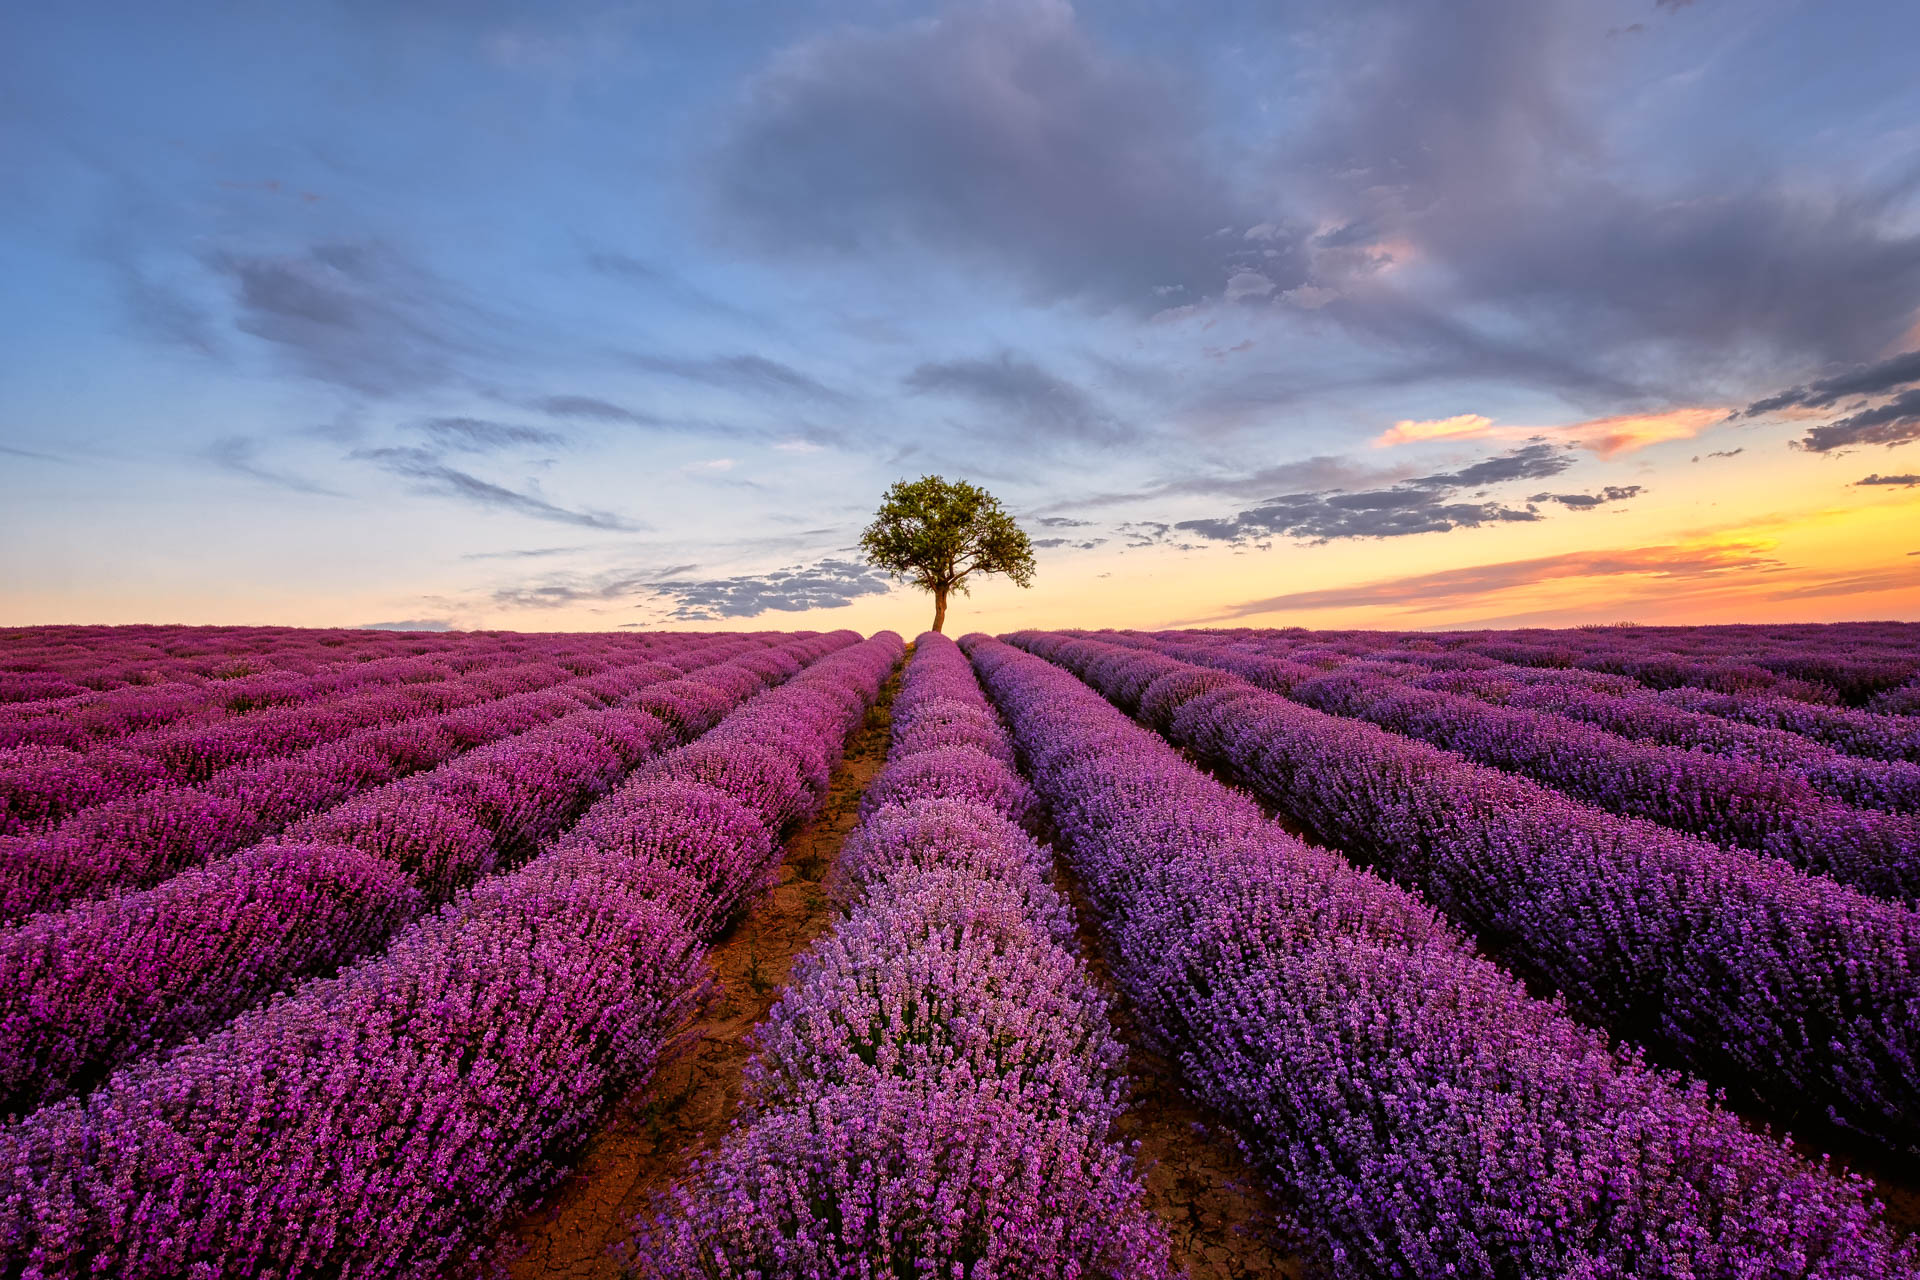 A lone tree in a lavender field